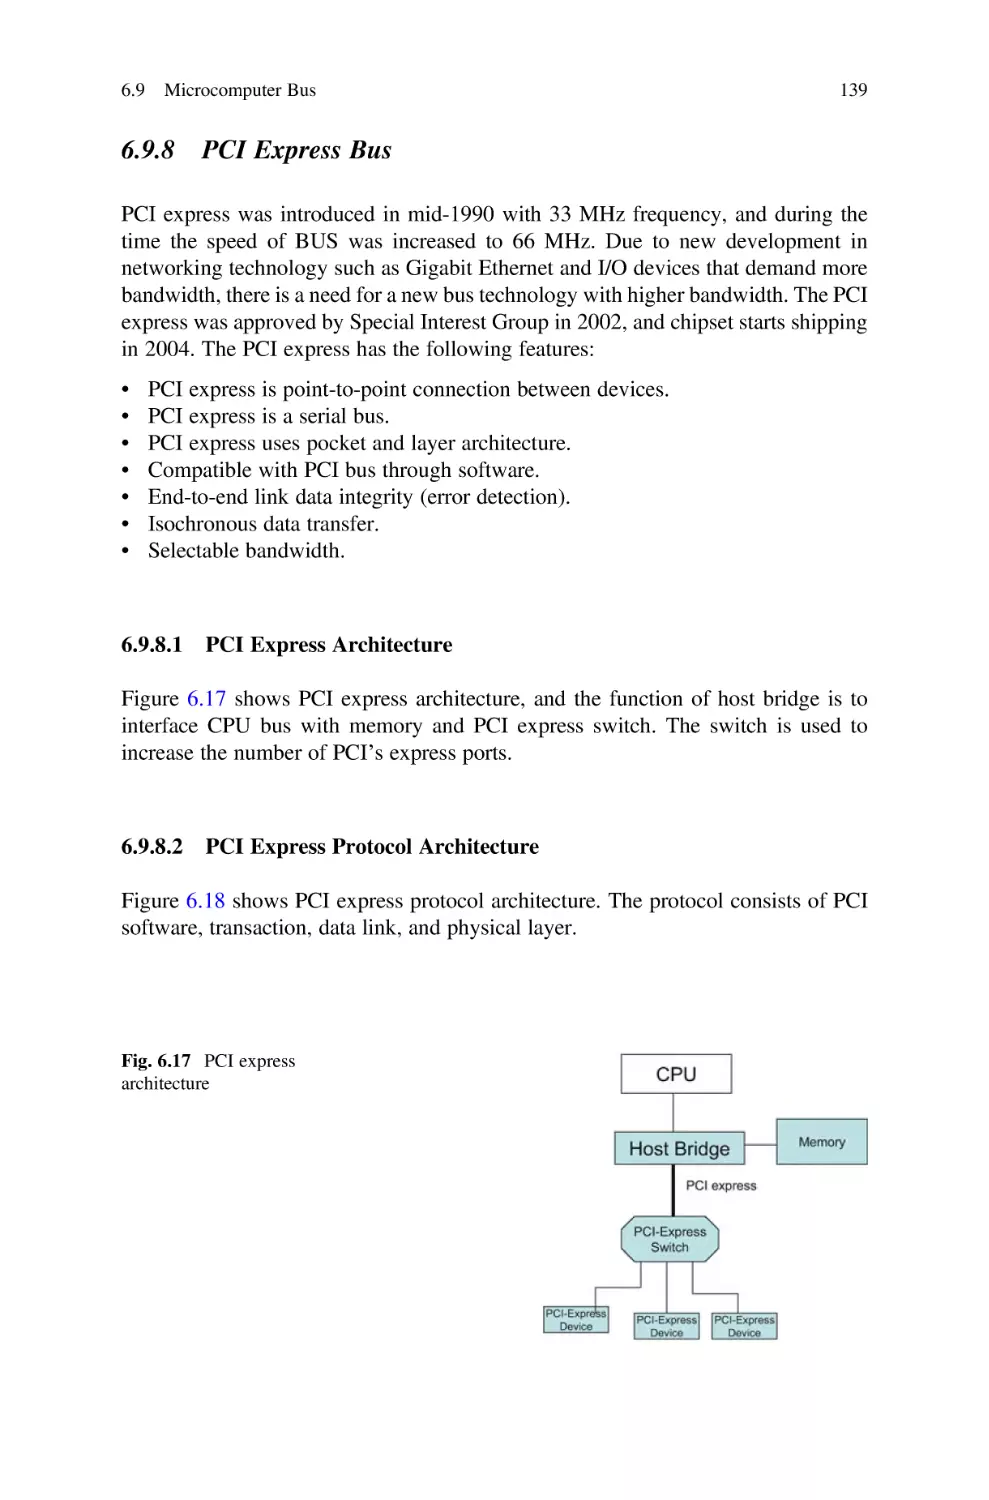 6.9.8 PCI Express Bus
6.9.8.1 PCI Express Architecture
6.9.8.2 PCI Express Protocol Architecture